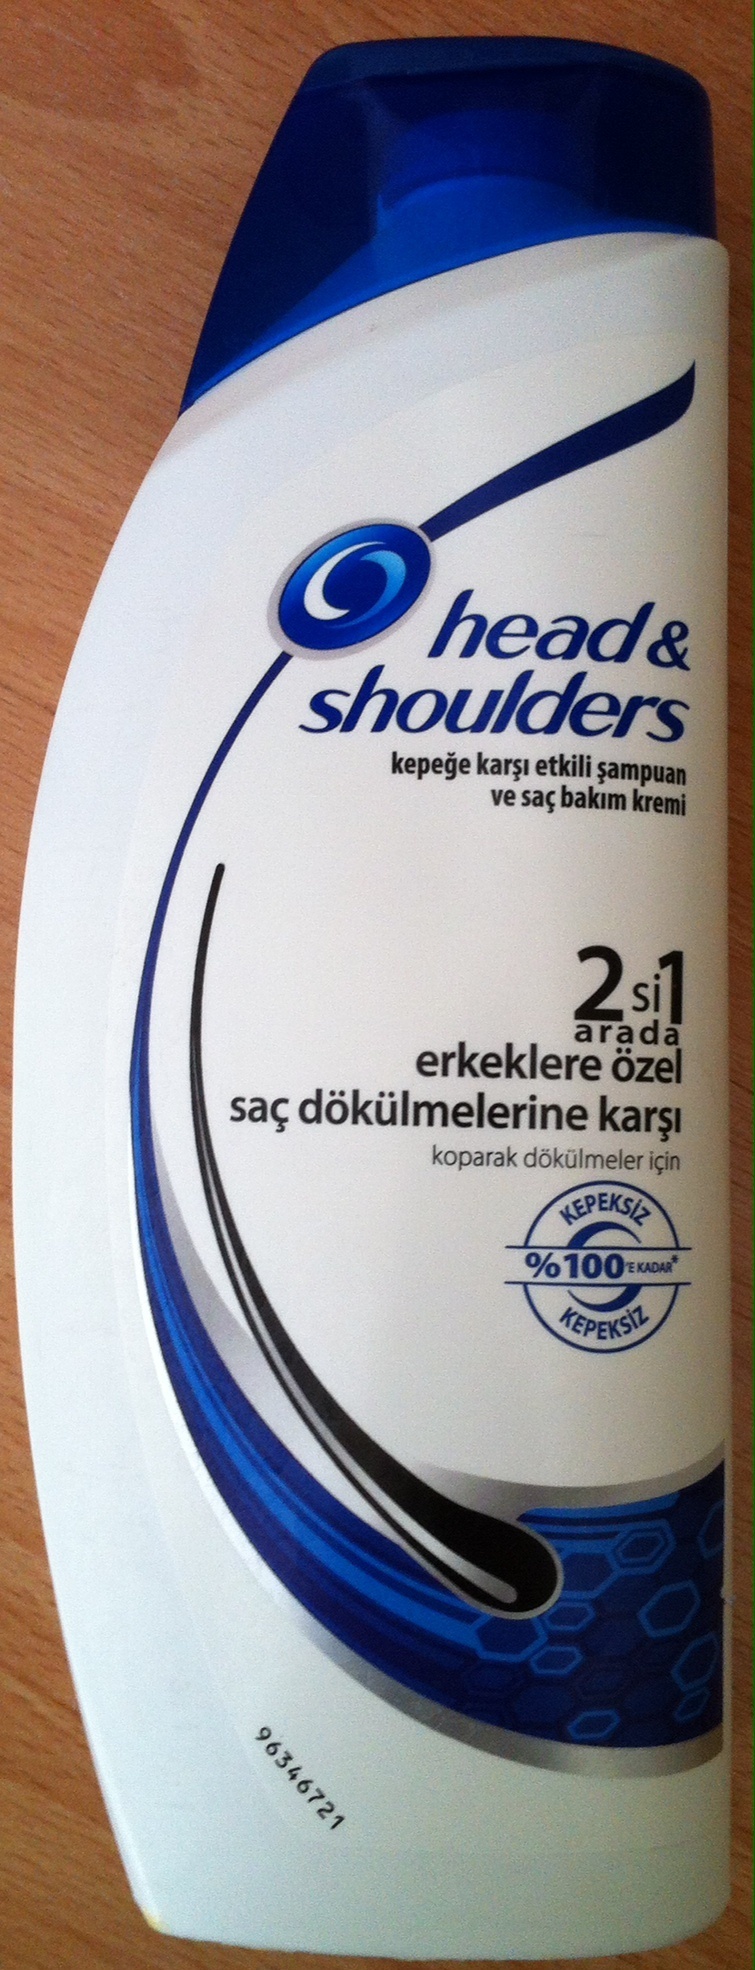 Head & Shoulders - Product - en